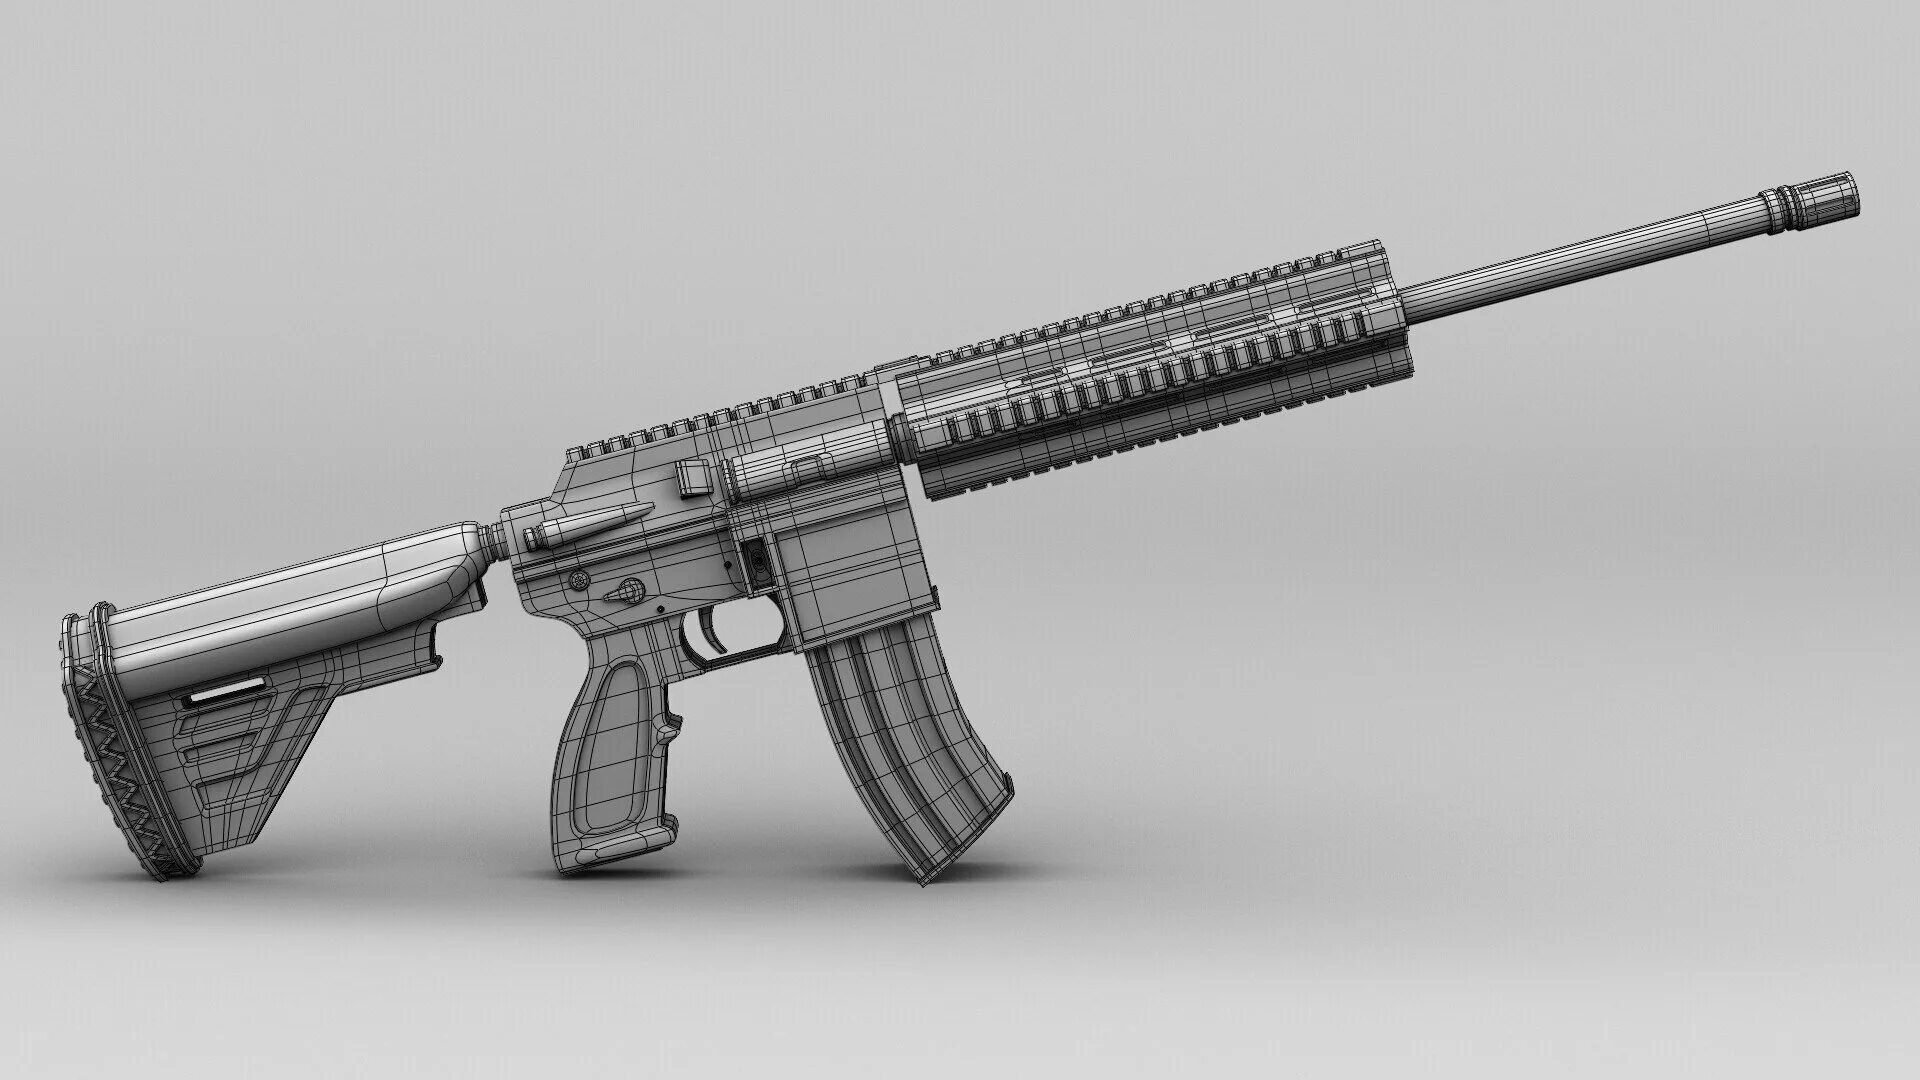 HK m416. M416 автомат PUBG. М416 оружие в ПАБГ. М416 винтовка PUBG.